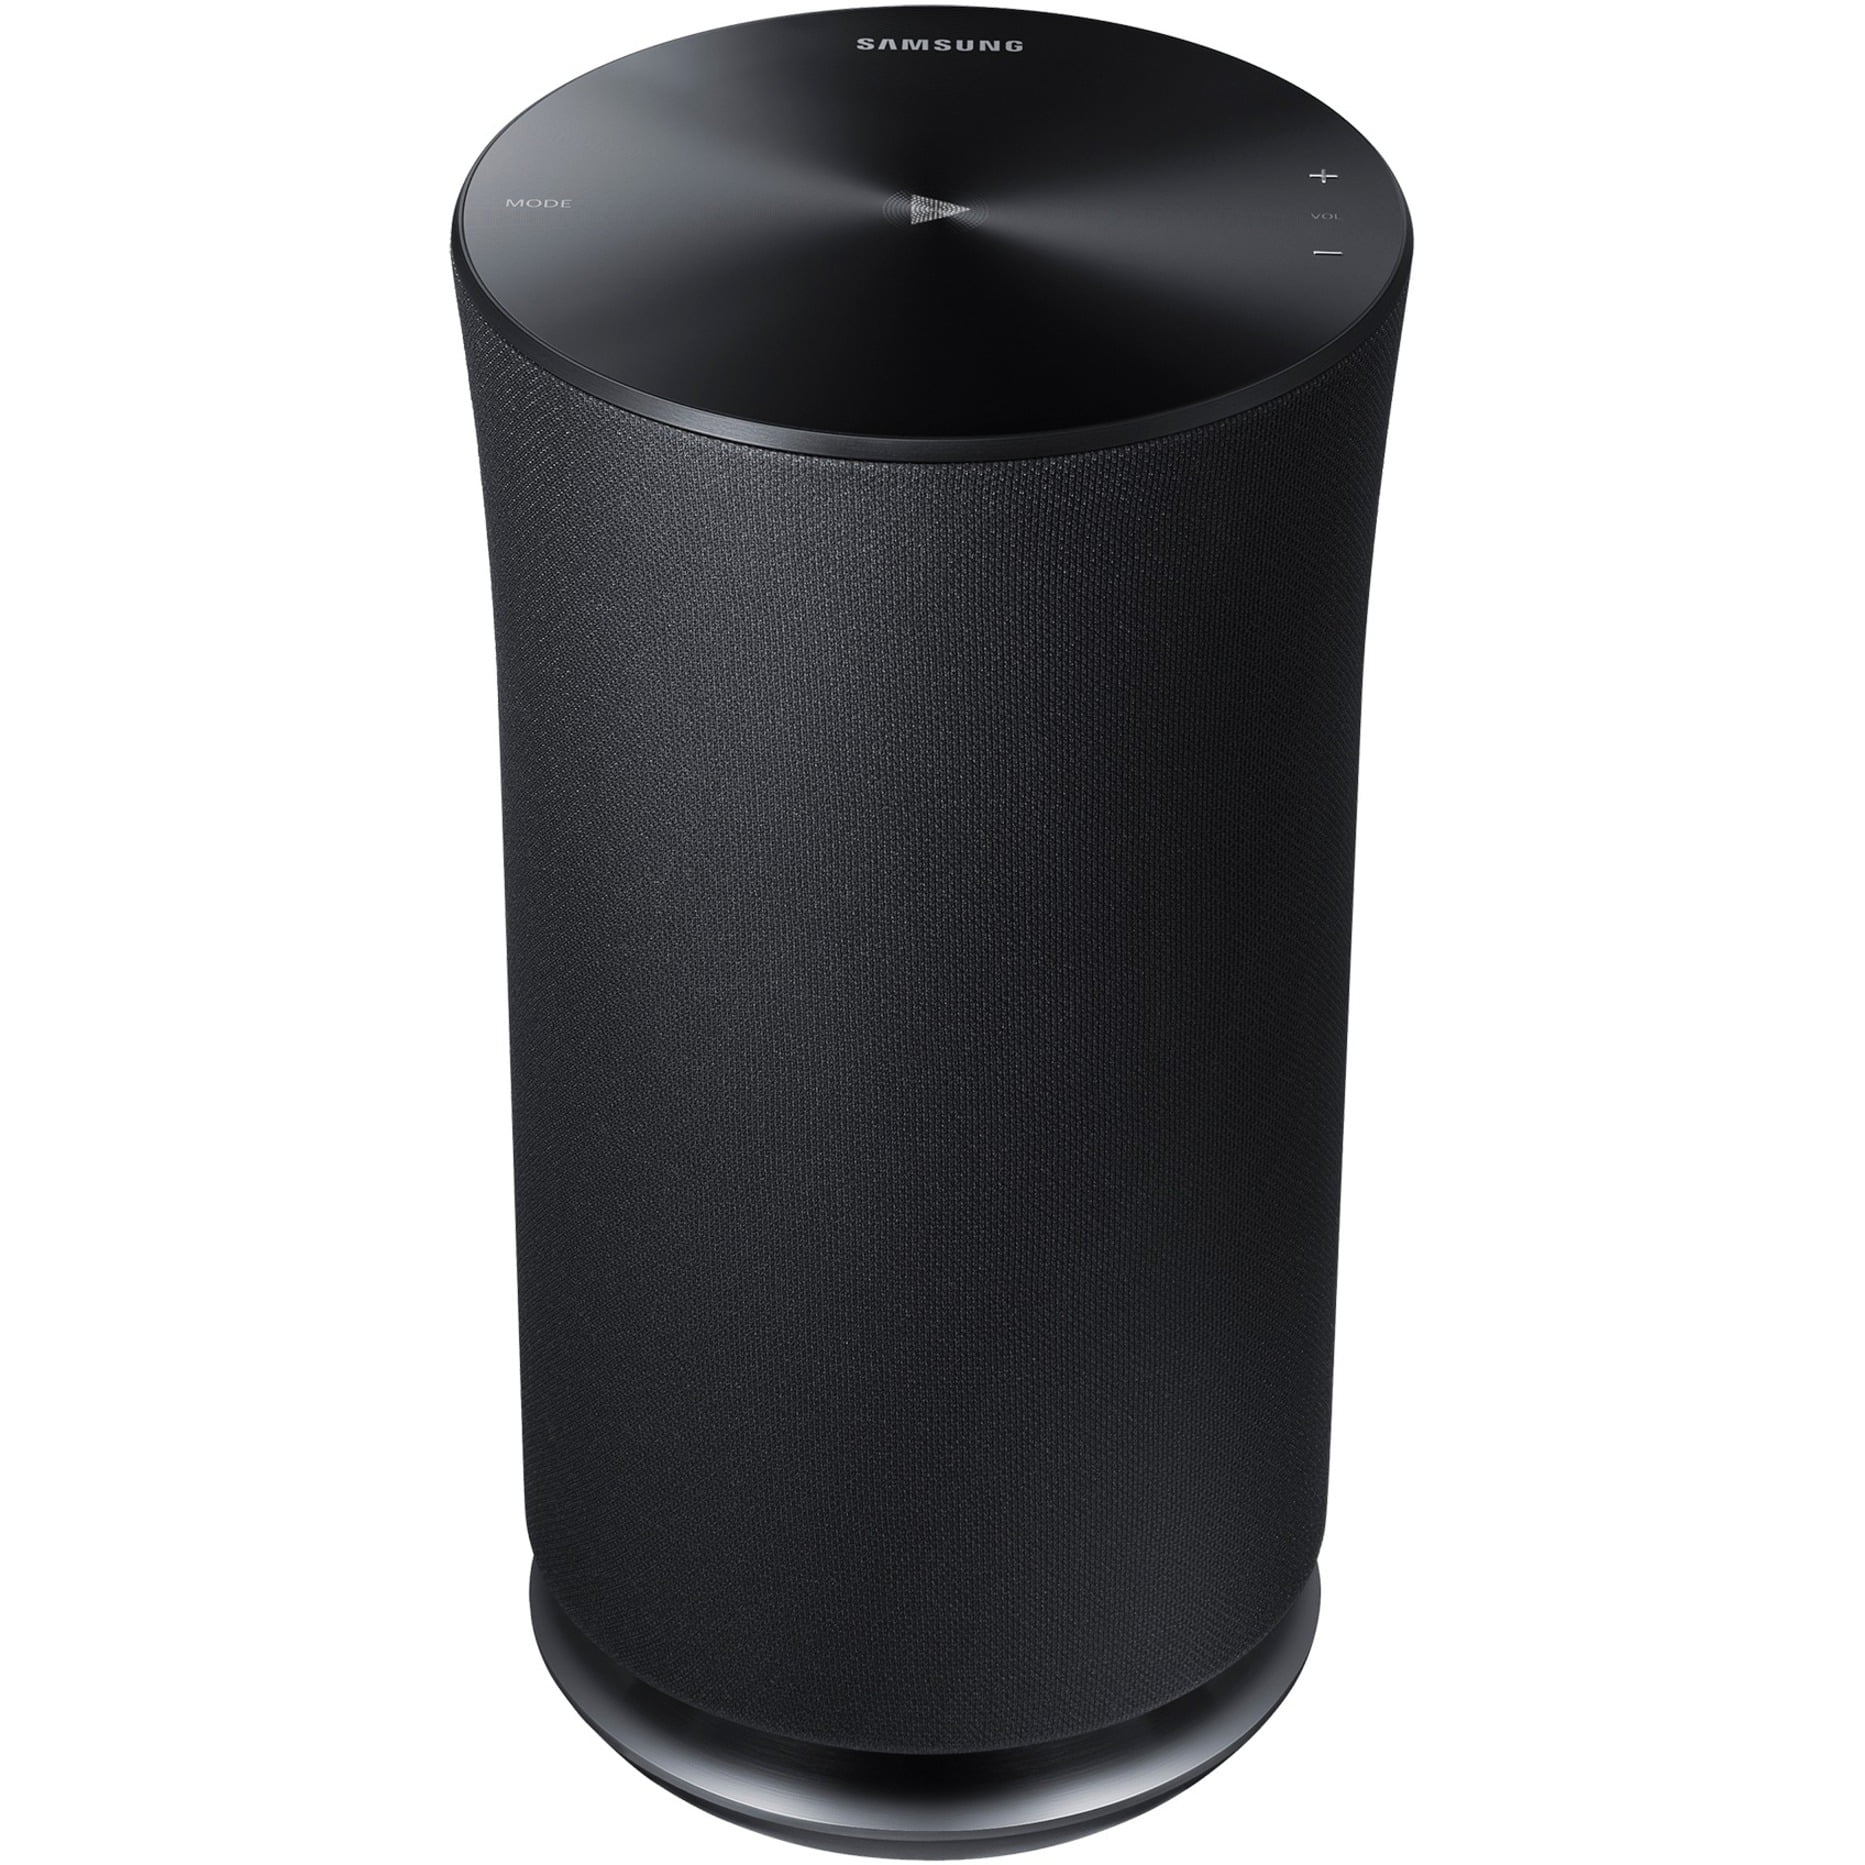 ga sightseeing niets Maak het zwaar Samsung Radiant360 R3 1.0 Bluetooth Speaker System, Dark Gray - Walmart.com